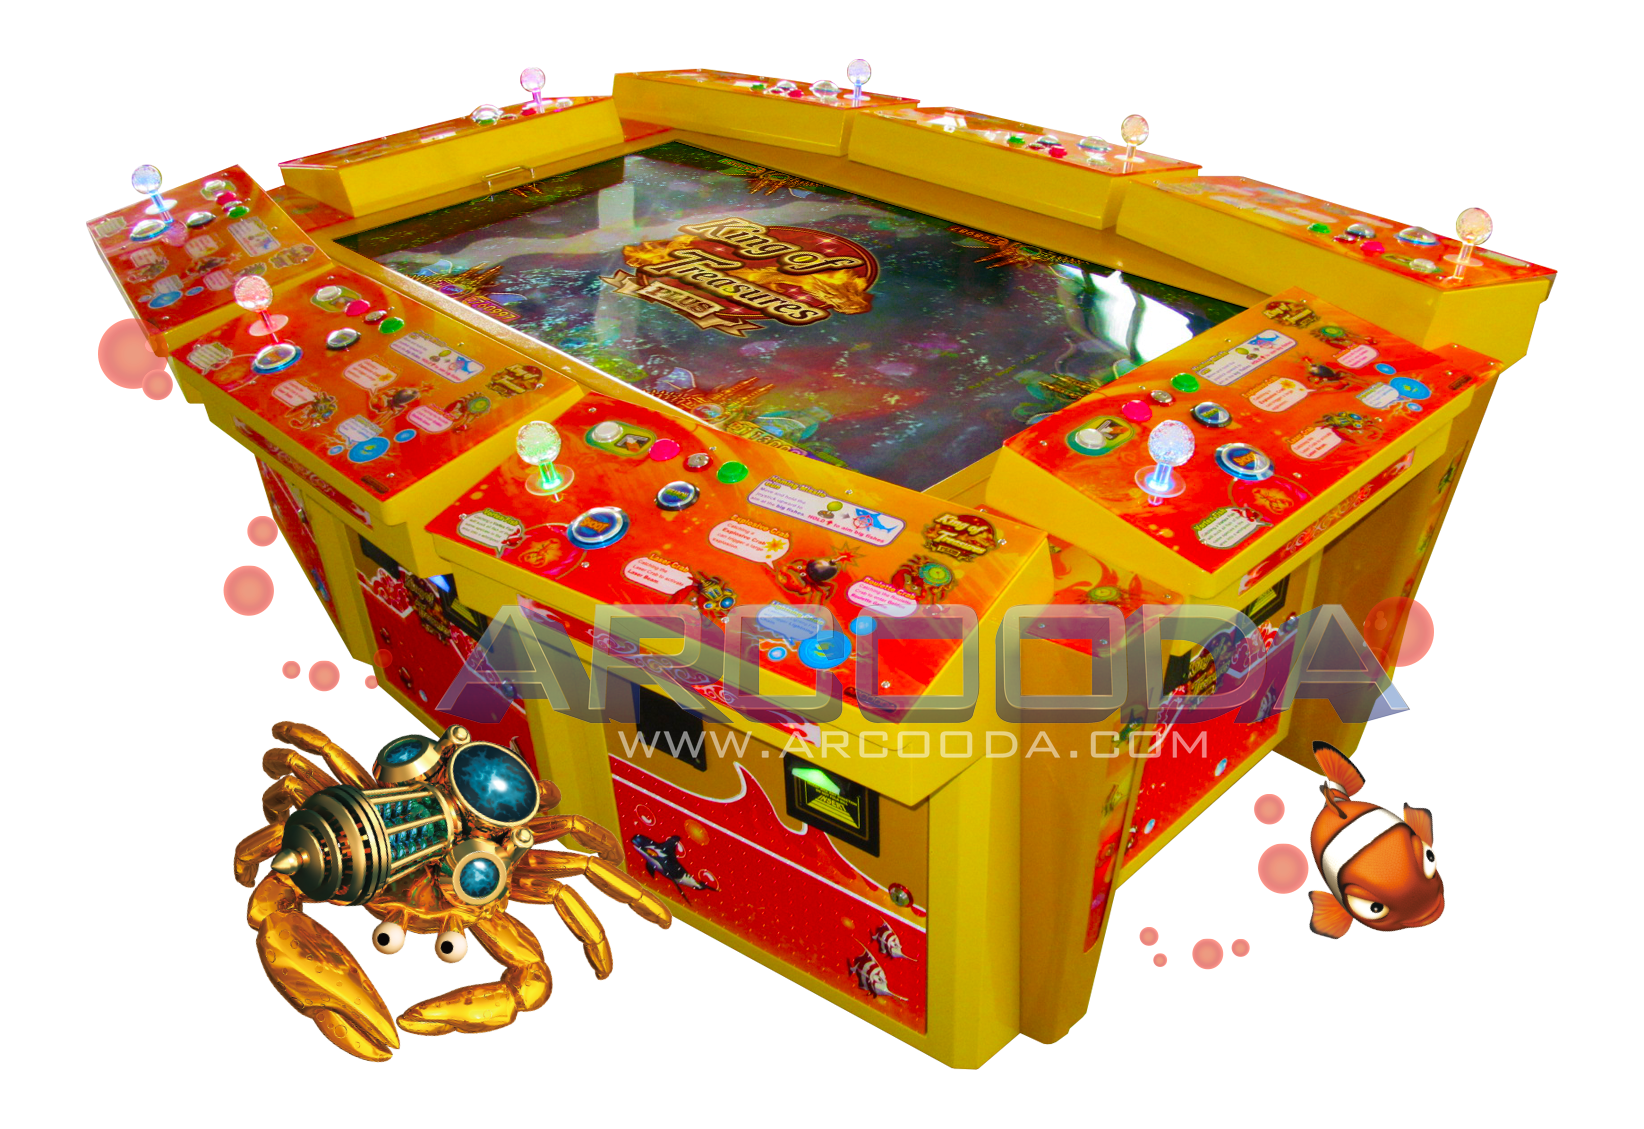 King-of-treasures-plus-arcade-machine-featured-view